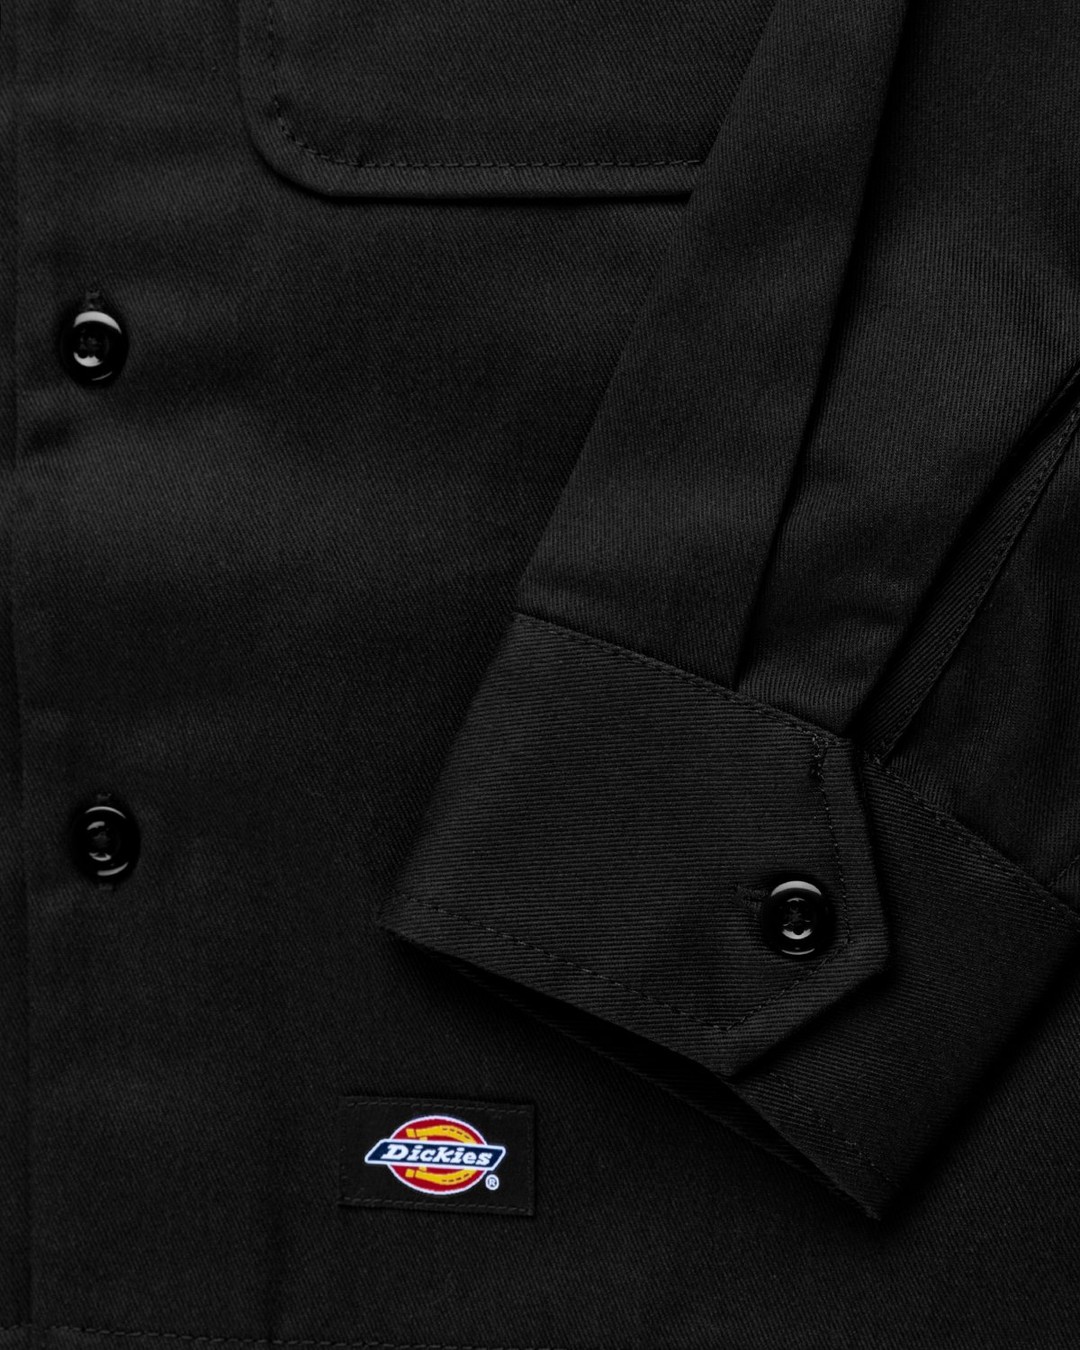 Highsnobiety x Dickies – Service Shirt Black - Longsleeve Shirts - Black - Image 4